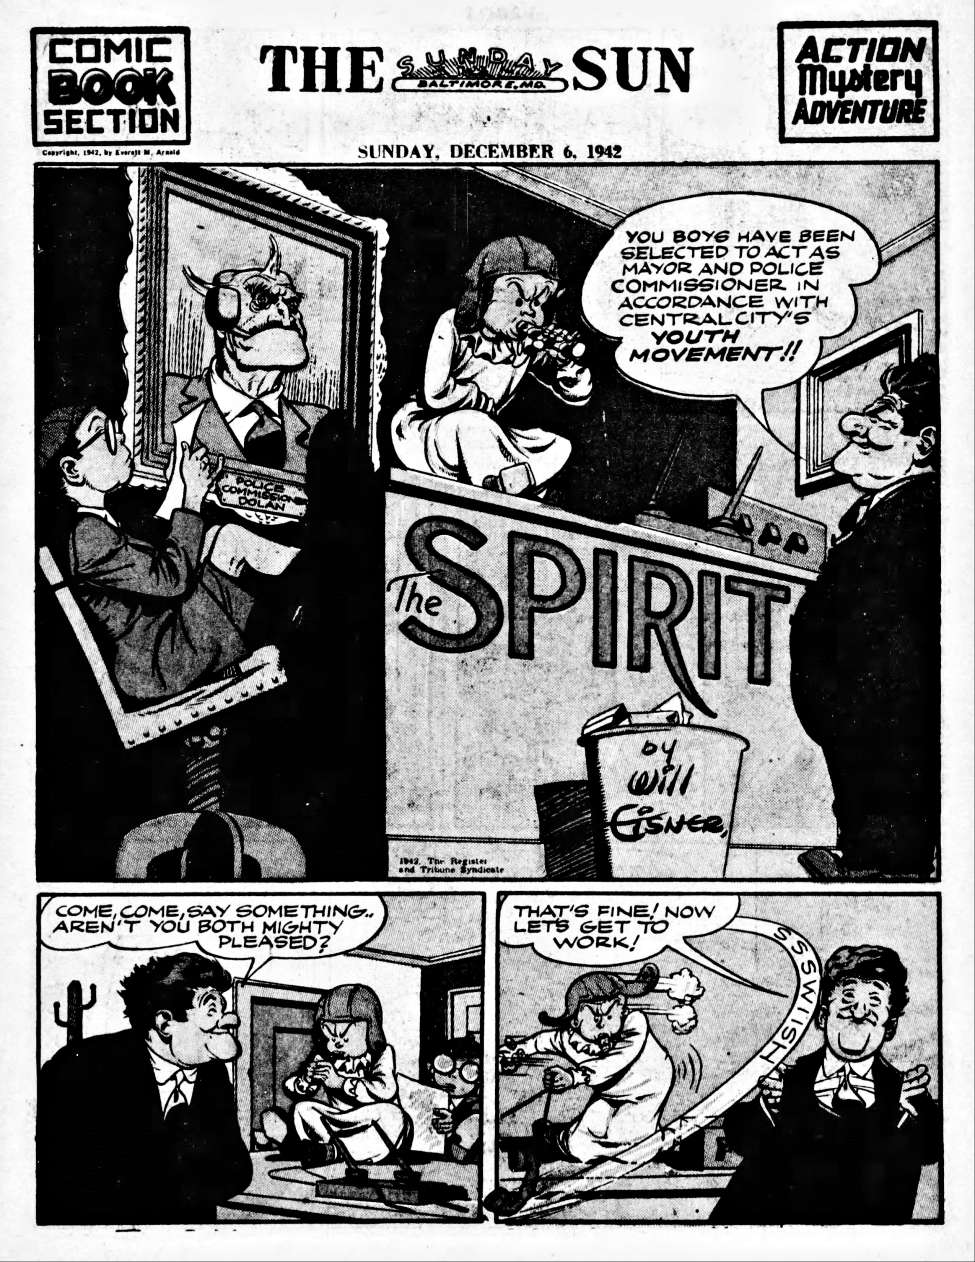 Comic Book Cover For The Spirit (1942-12-06) - Baltimore Sun (b/w)